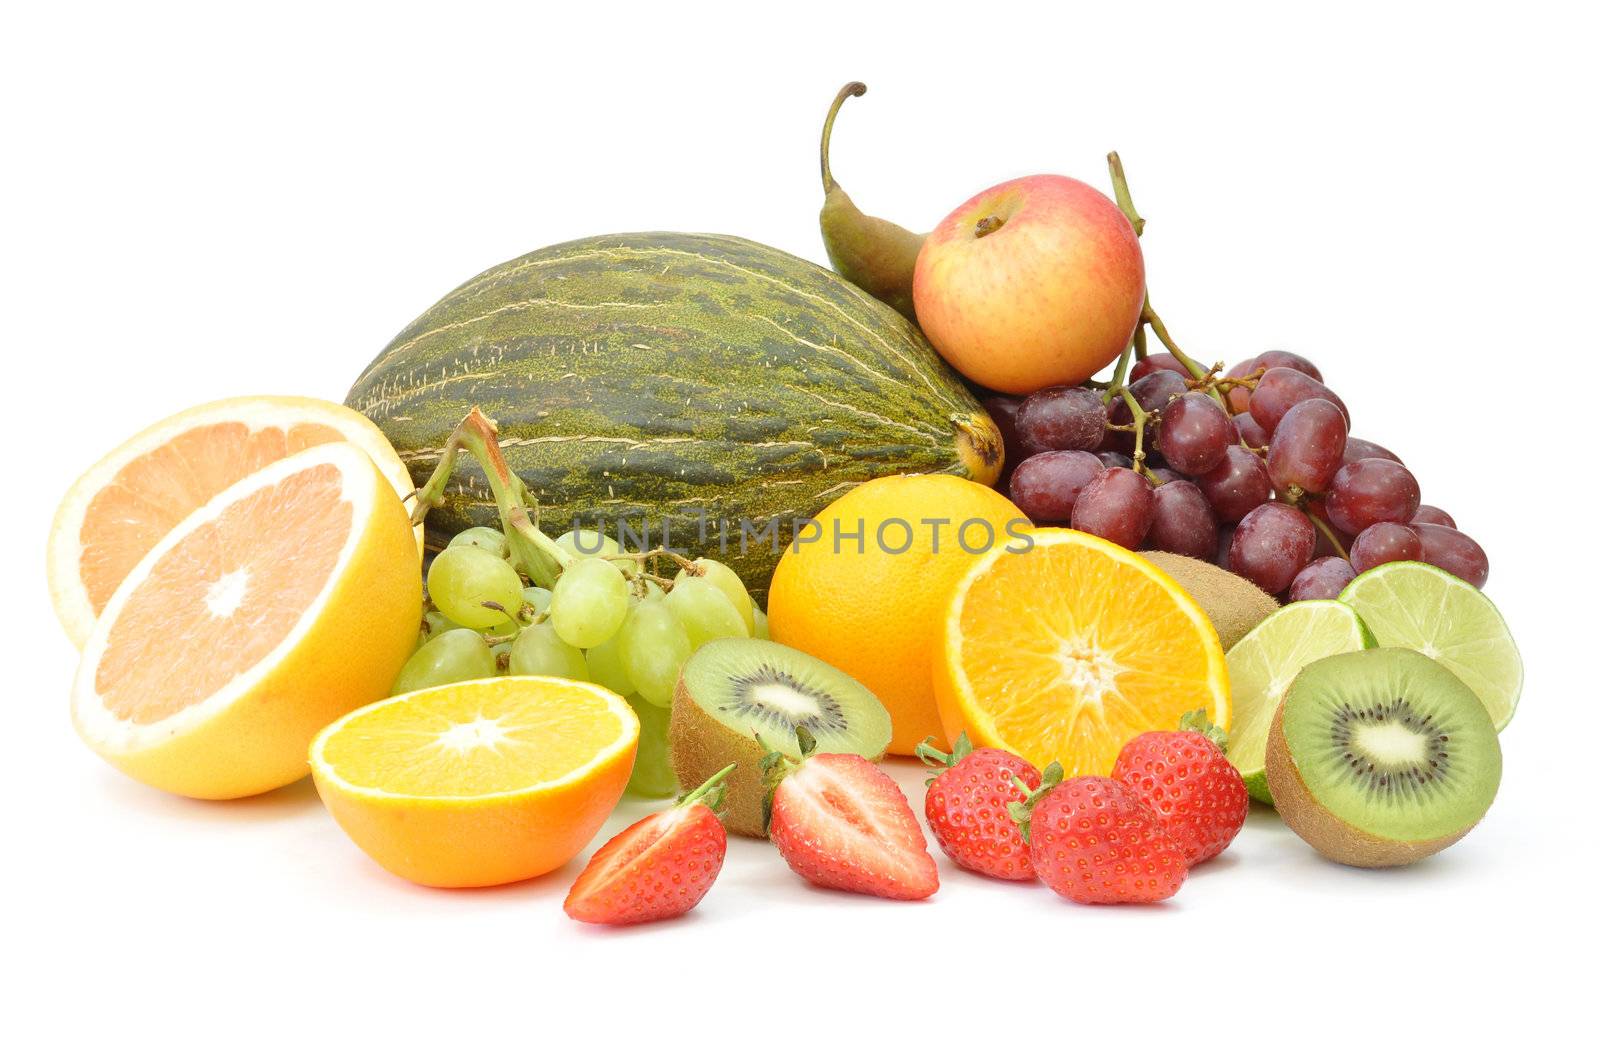 Fruit  by unikpix